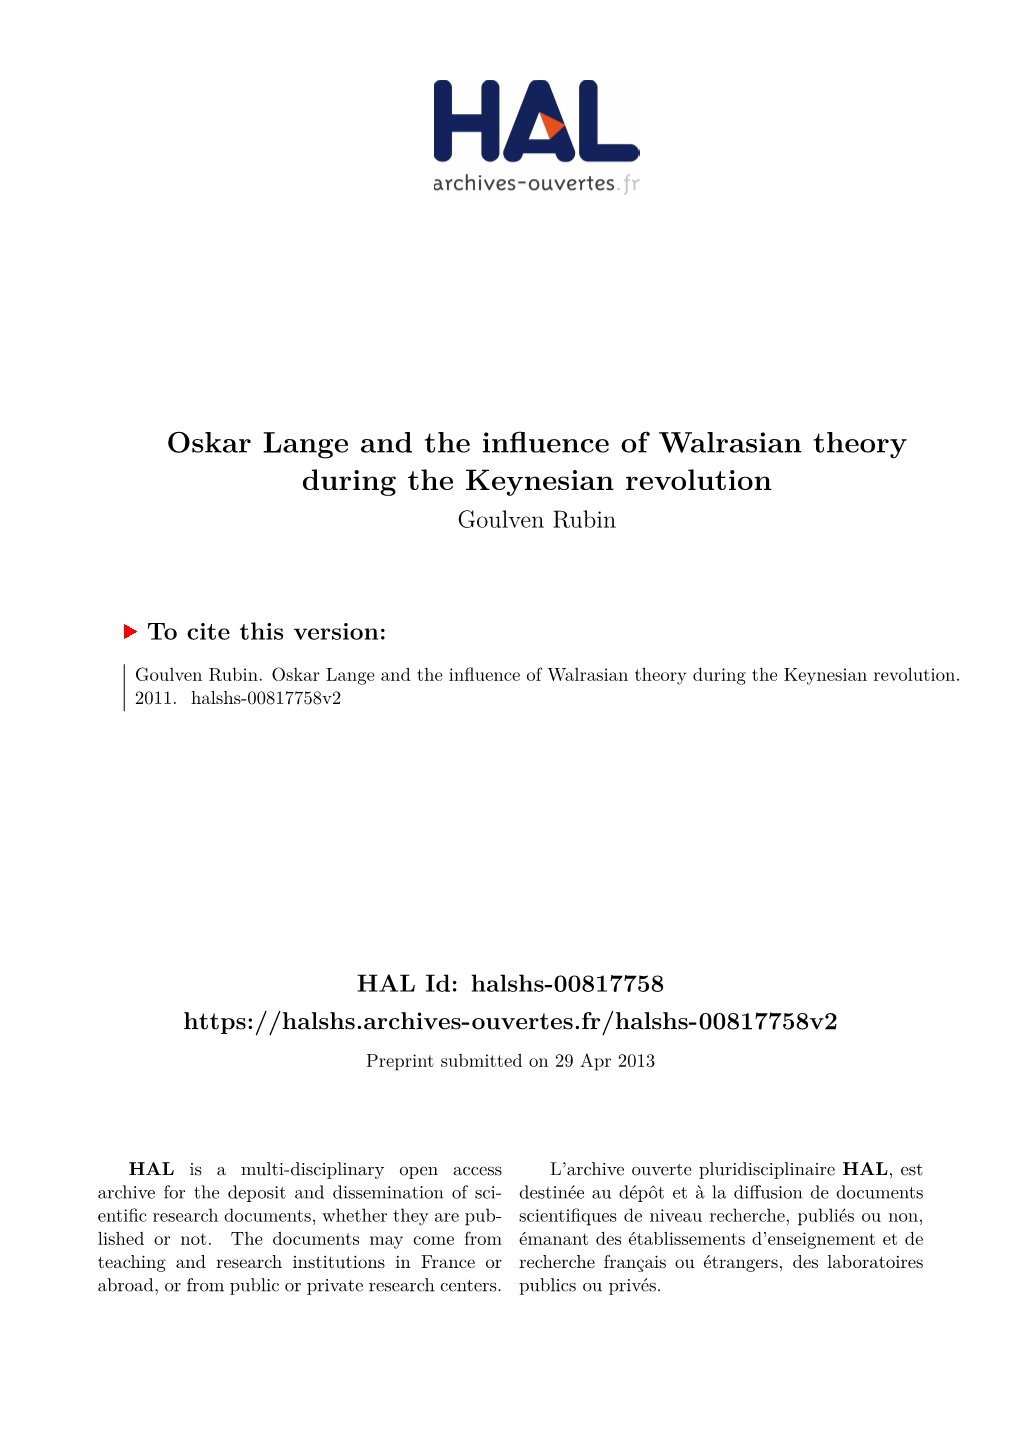 Oskar Lange and the Influence of Walrasian Theory During the Keynesian Revolution Goulven Rubin